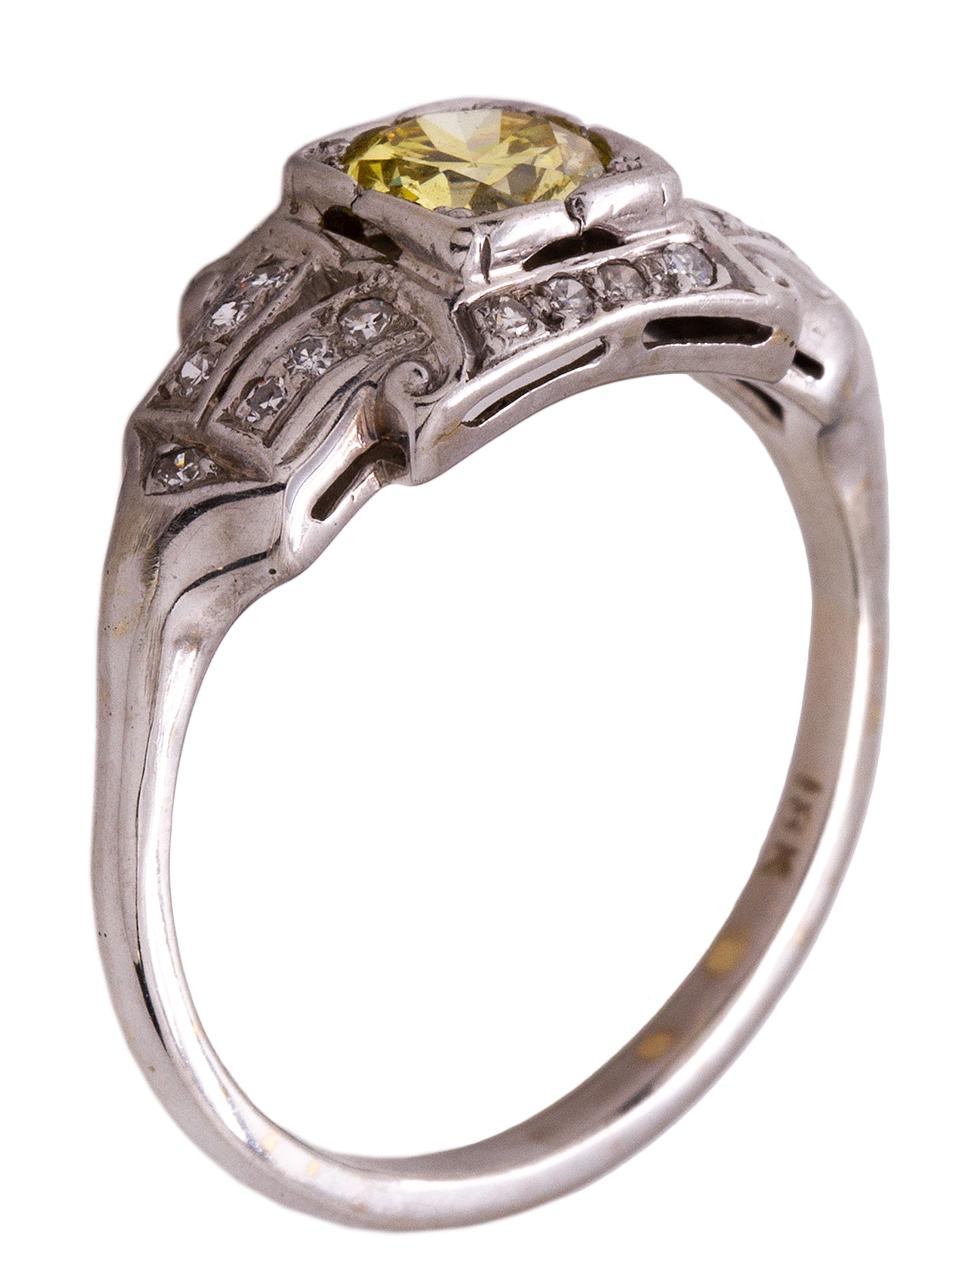 Art Deco Vintage Engagement Ring 18K 0.55ct Intense Fancy Yellow-VS2 Transitional Cut  For Sale